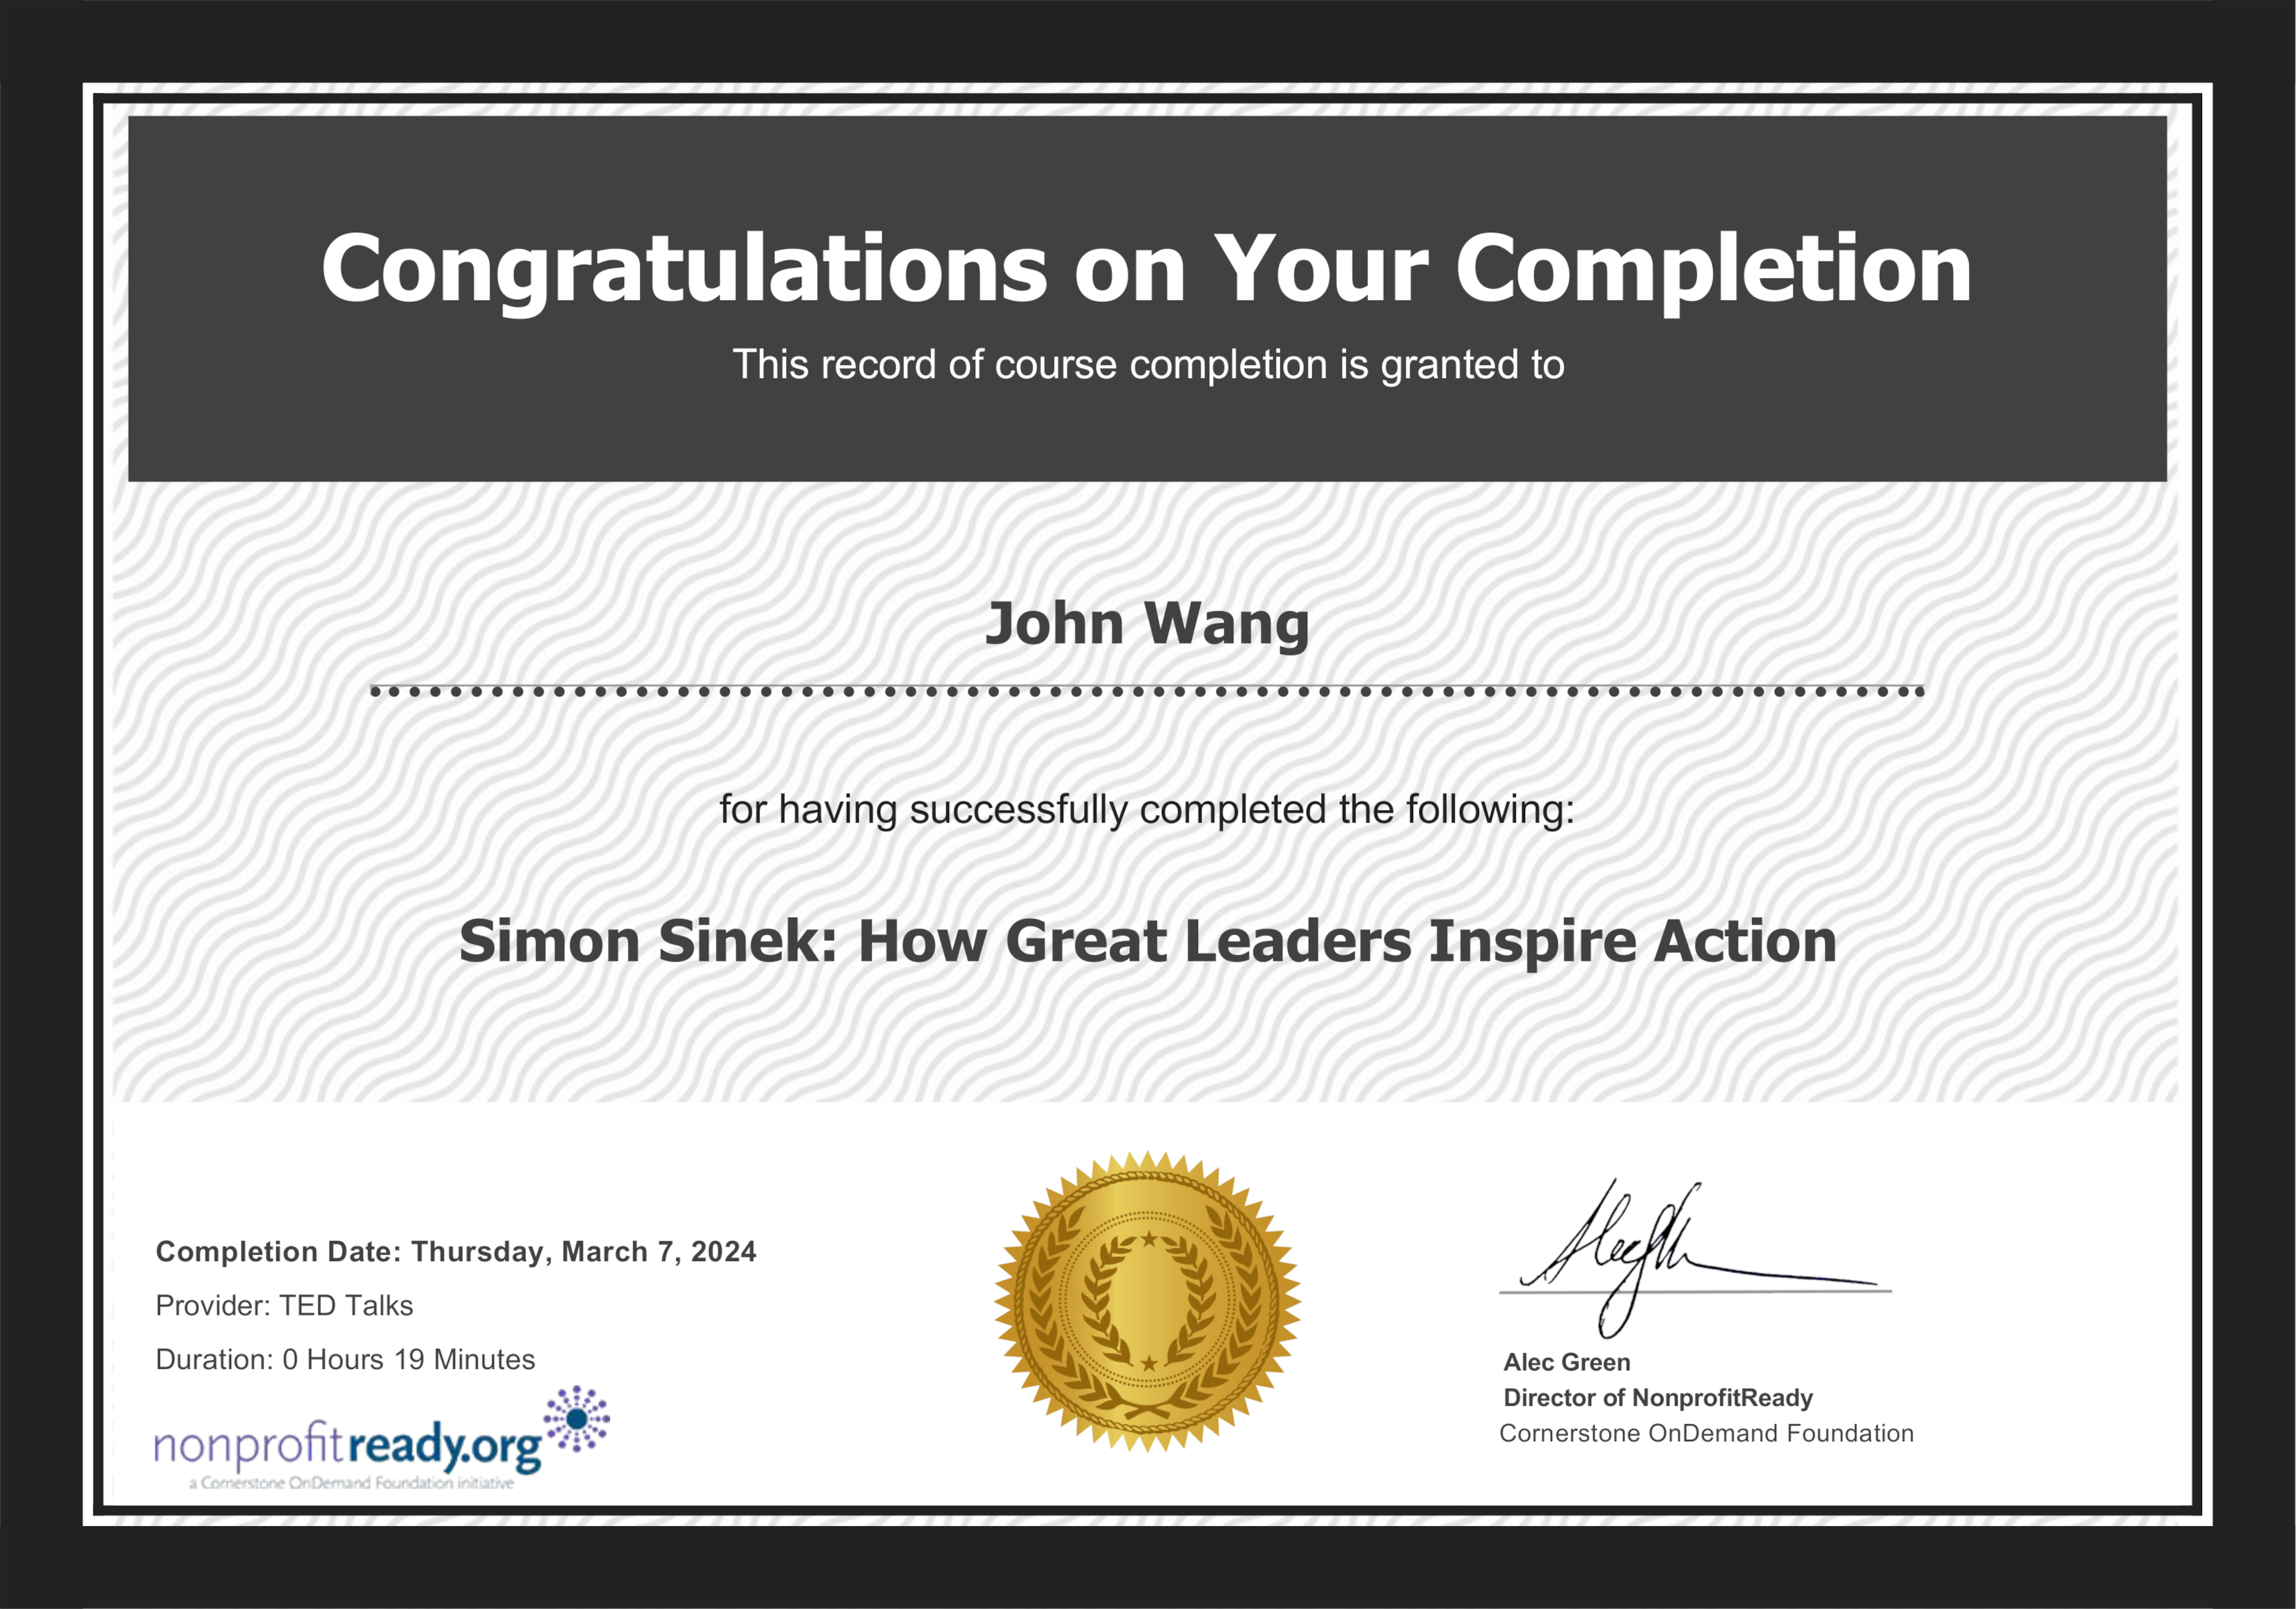 John's Simon Sinek: How Great Leaders Inspire Action from NonprofitReady